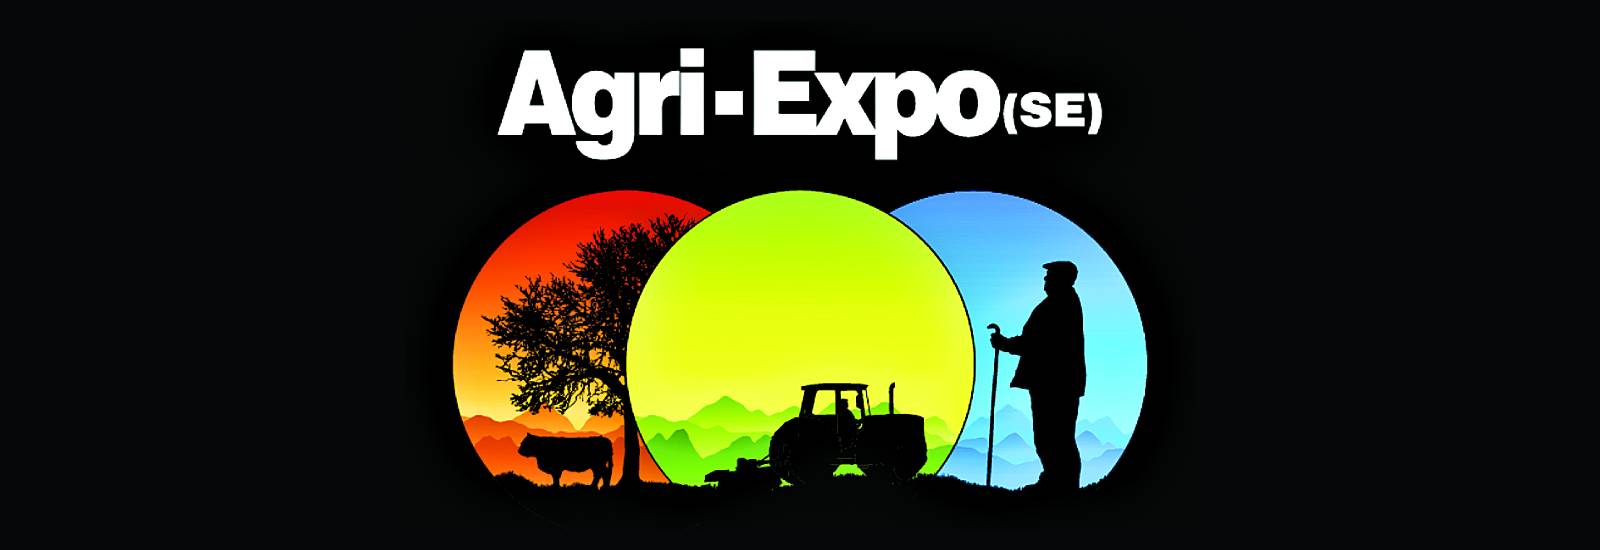 Agri-Expo-Logo.jpg